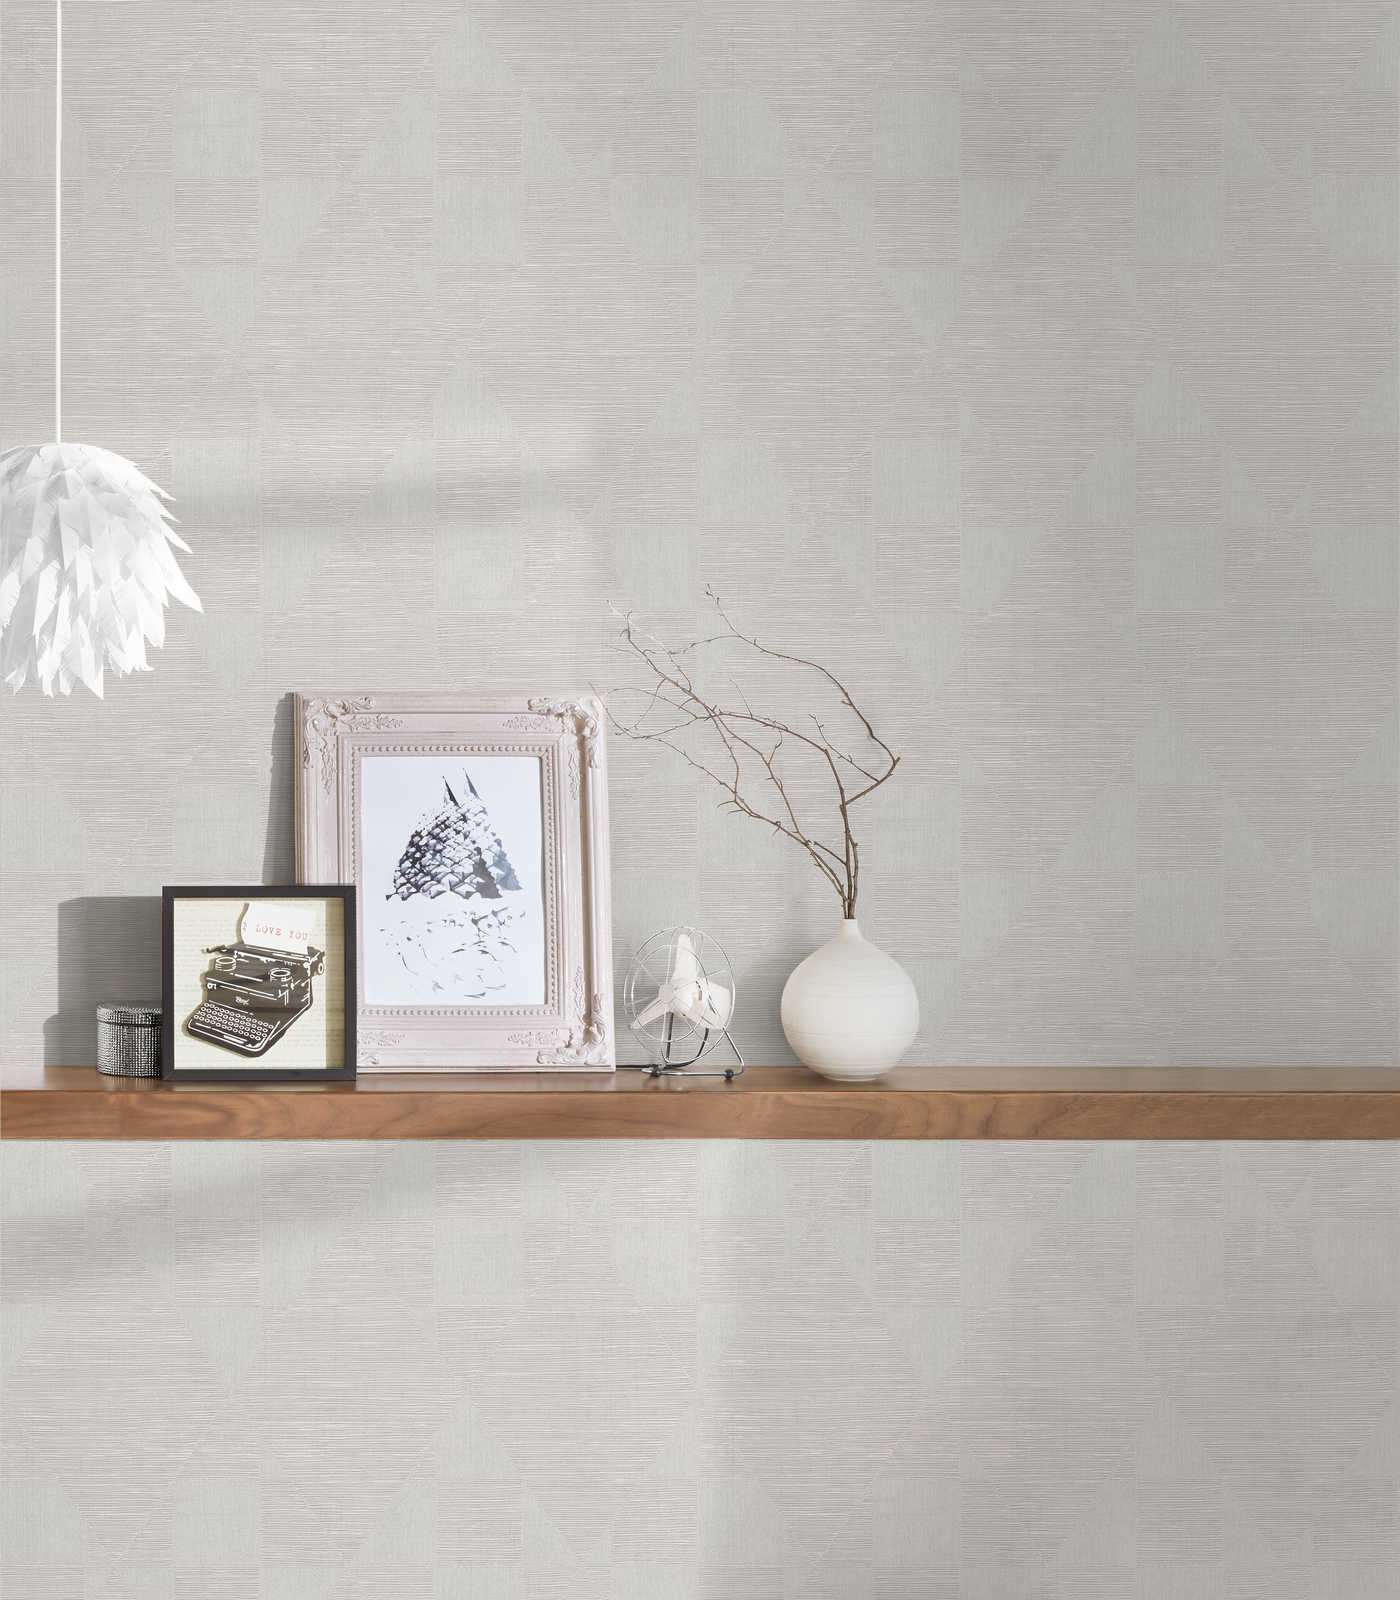             Metallic wallpaper with geometric texture pattern - beige, cream
        